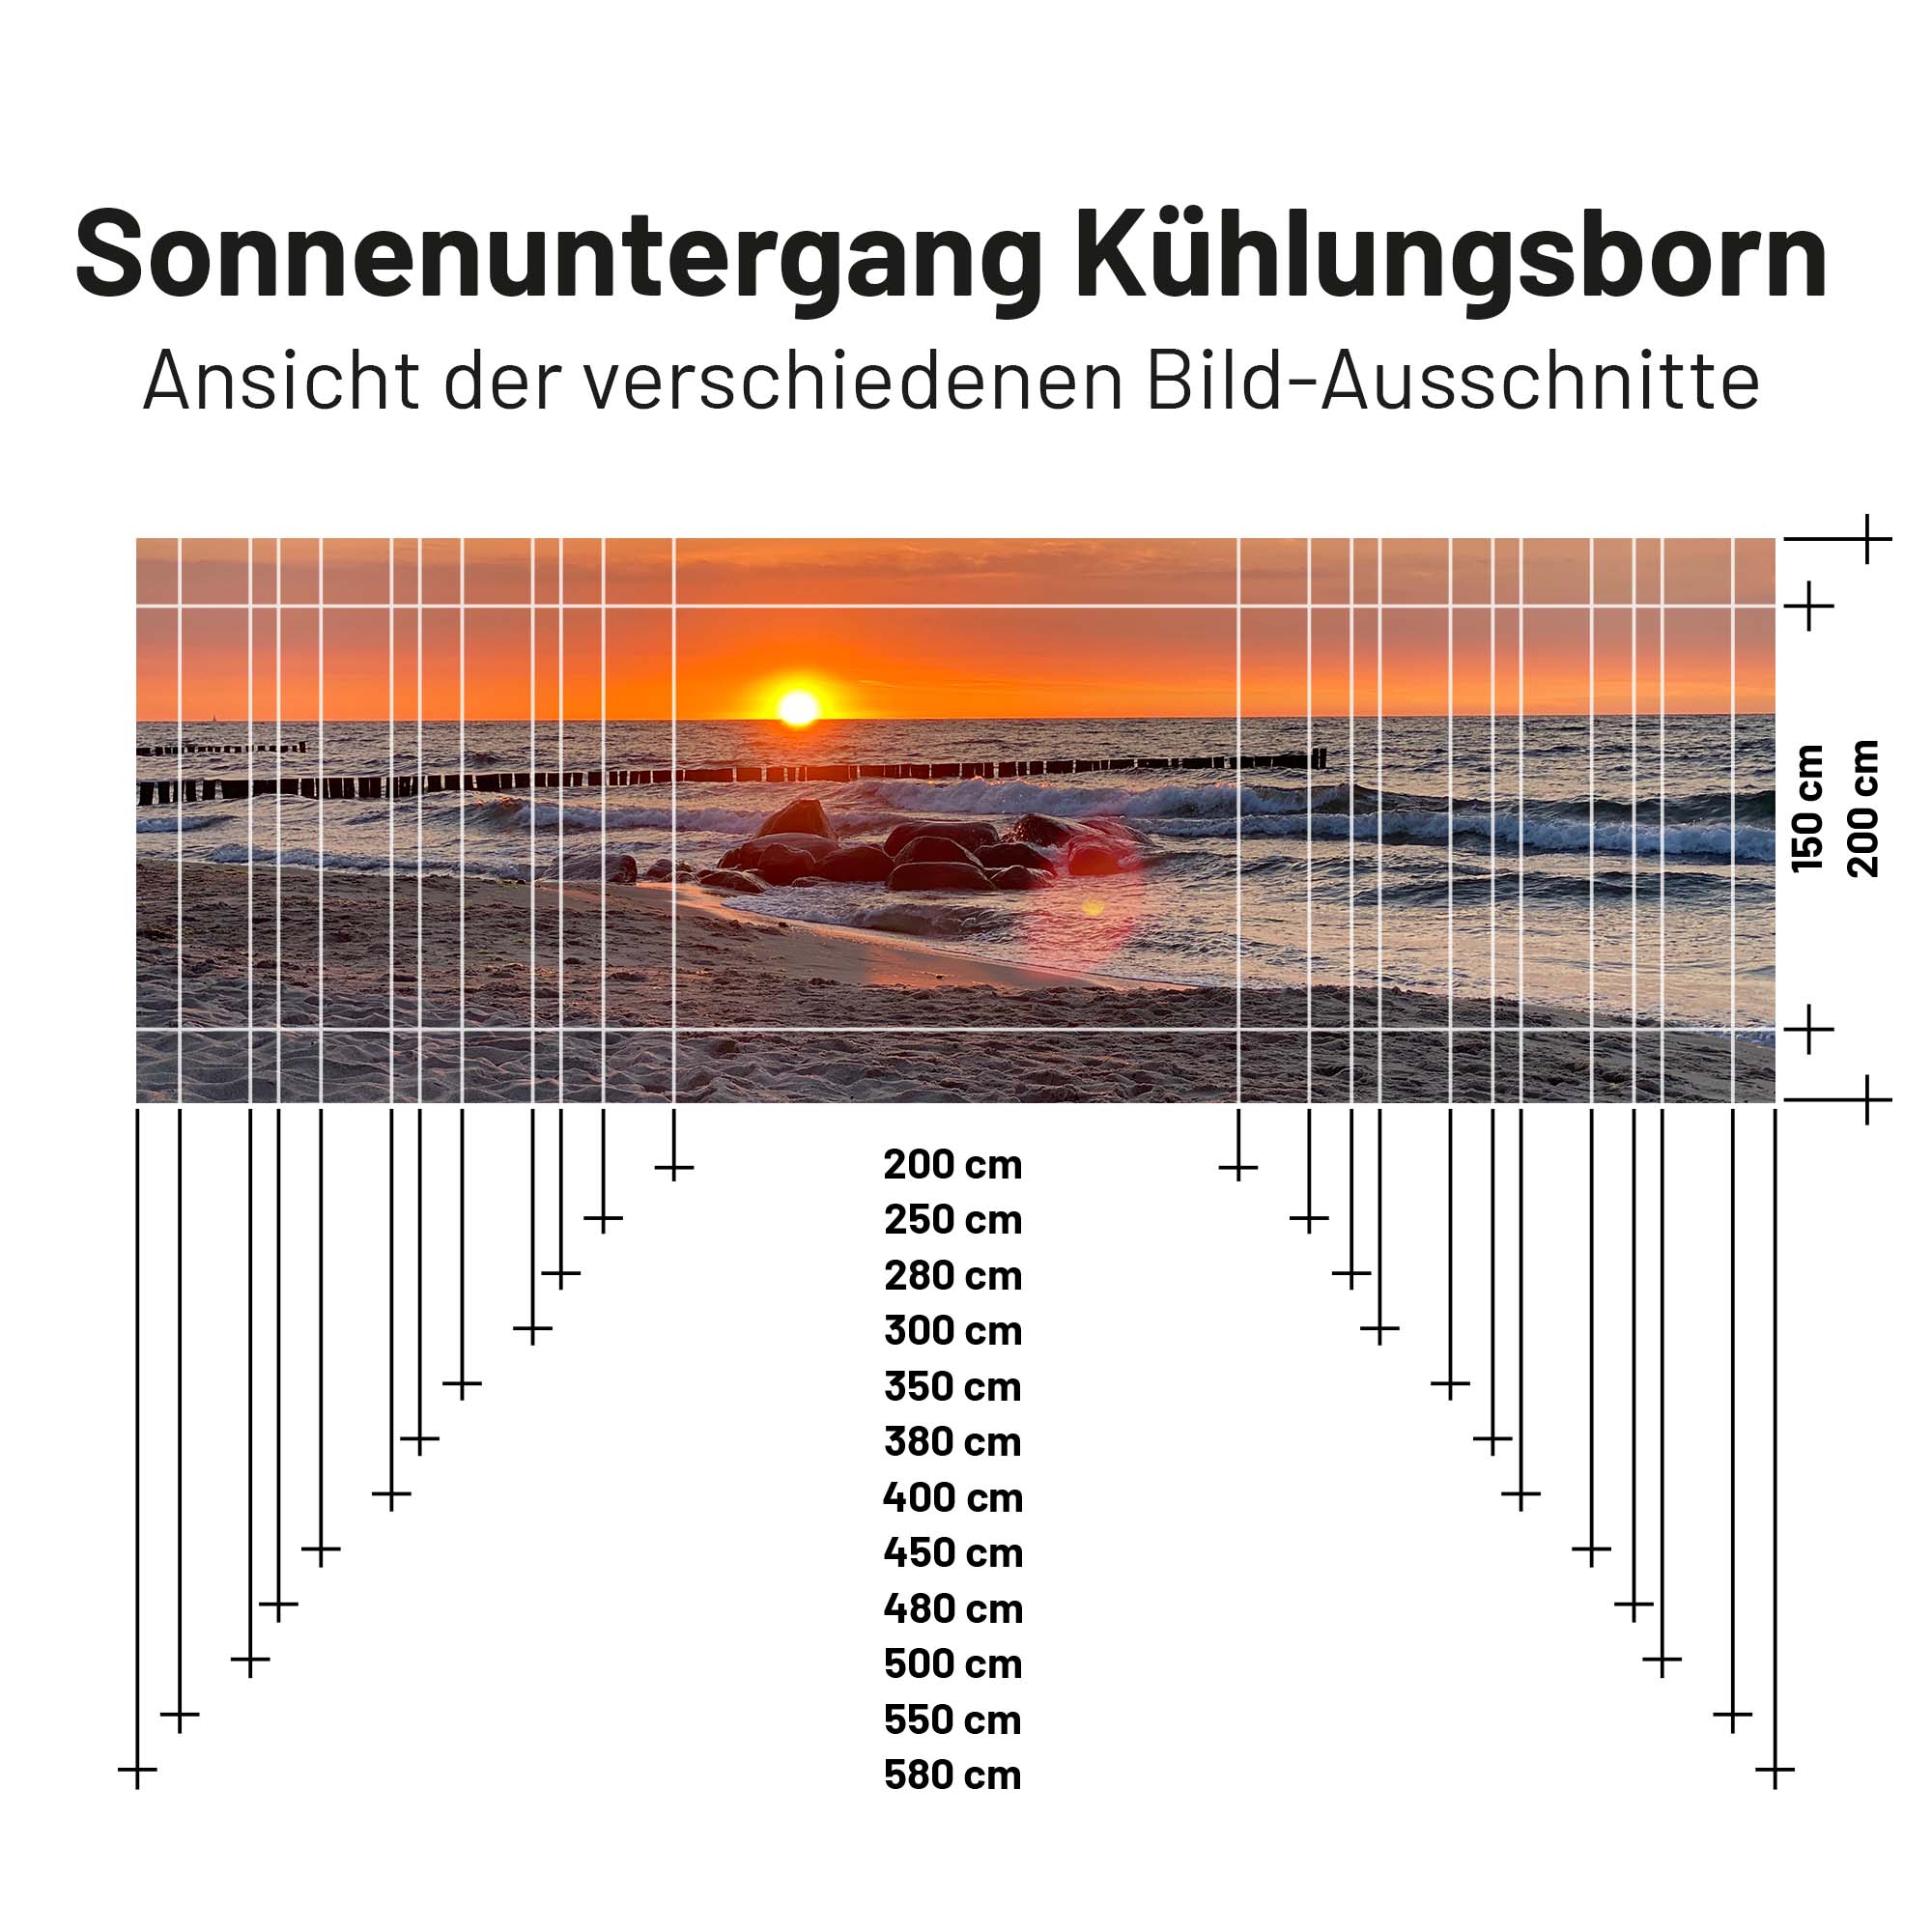 Textil Sonnensegel SONNENUNTERGANG KÜHLUNGSBORN 200cm Hoch